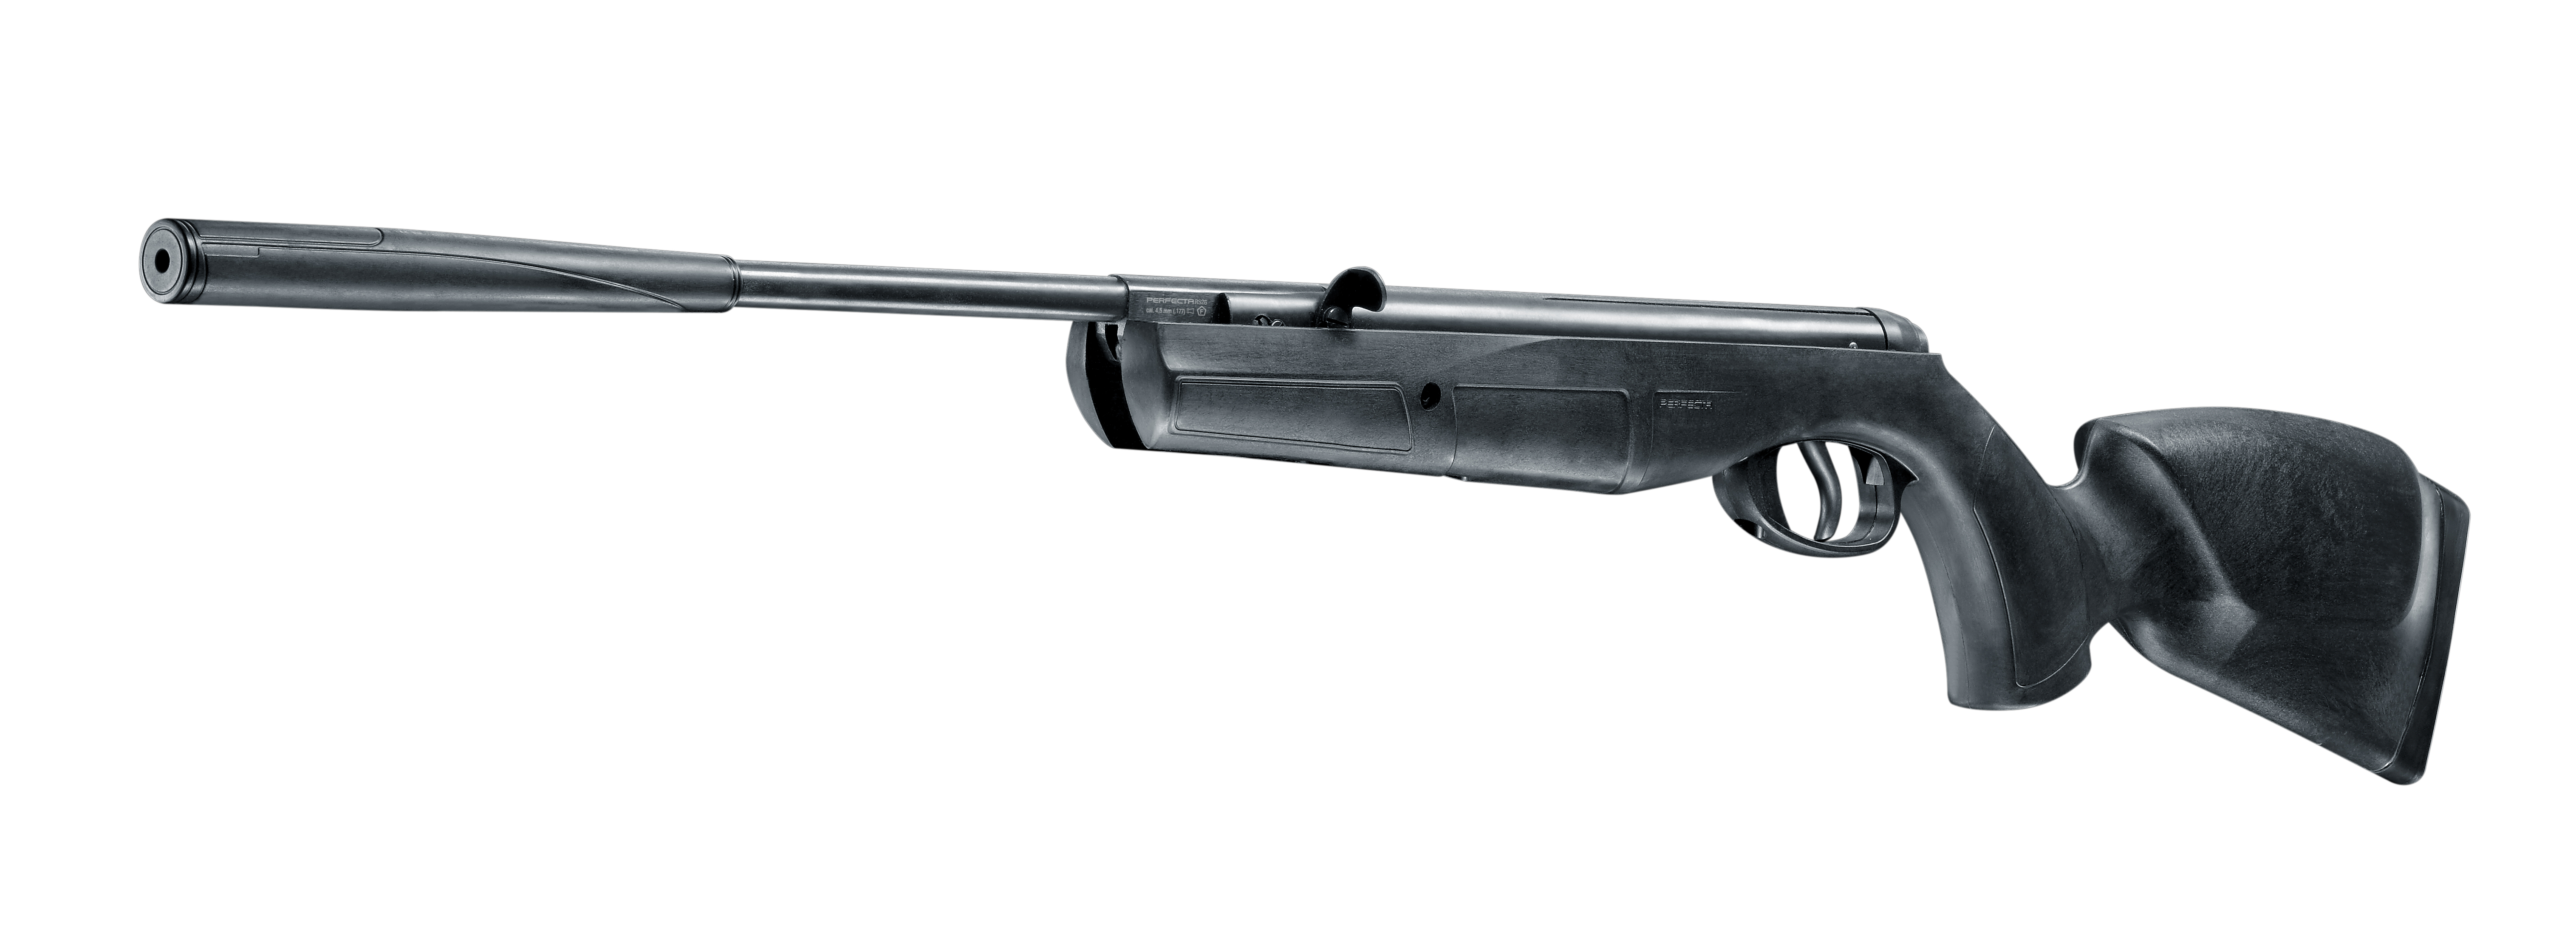 PERFECTA (Umarex) Spring Operated Airgun RS26